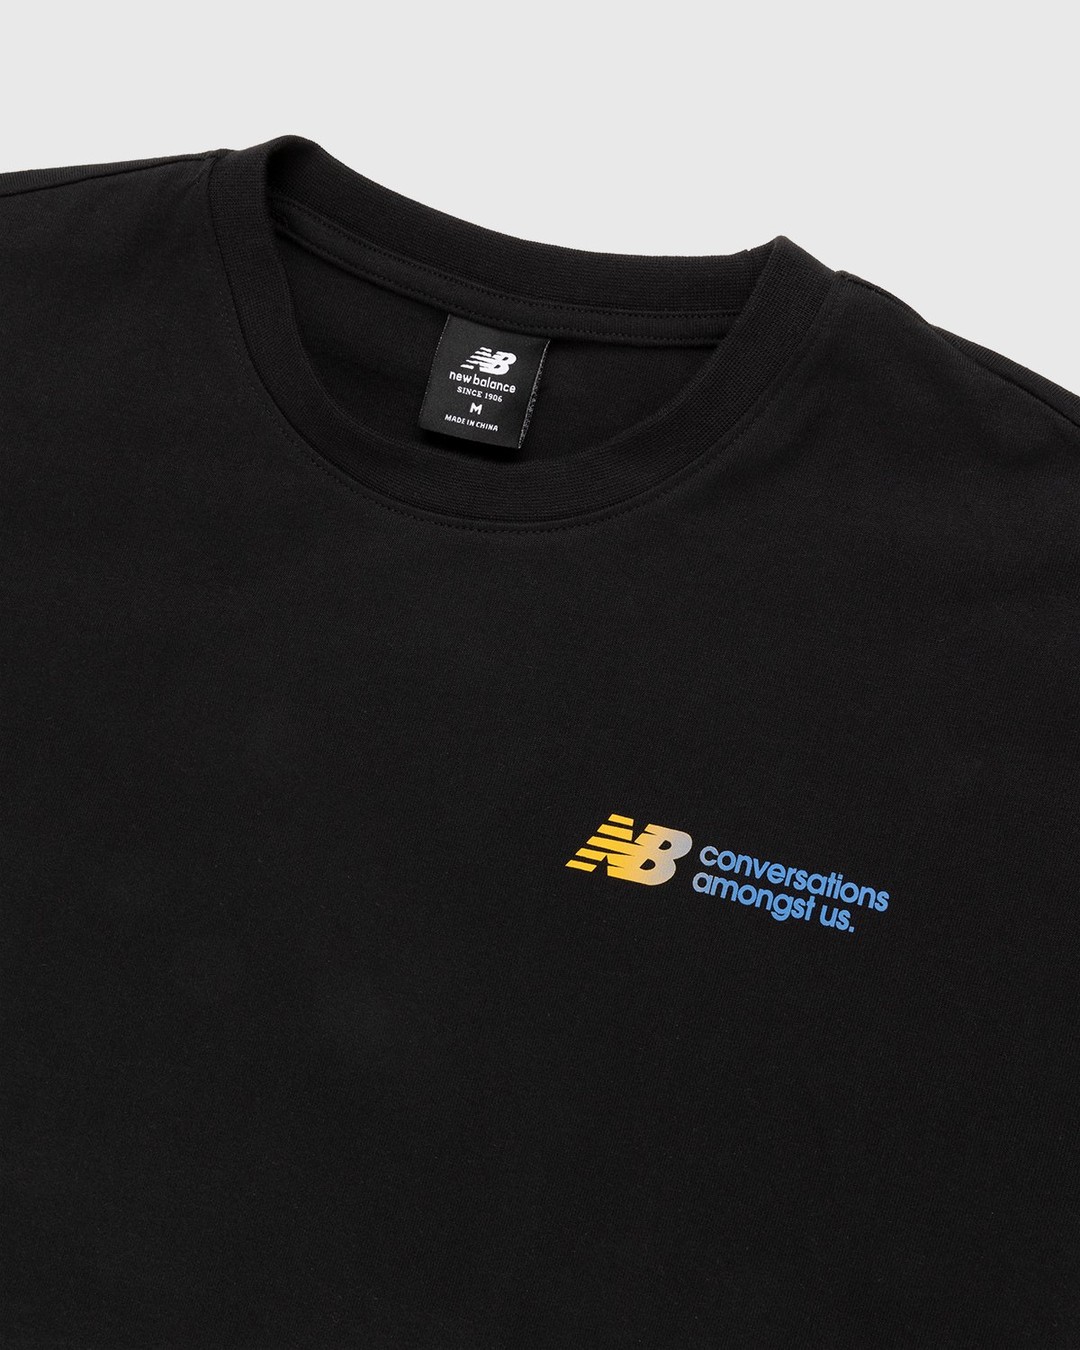 New Balance – Conversations Amongst Us Brand T-Shirt Black - T-shirts - Black - Image 4